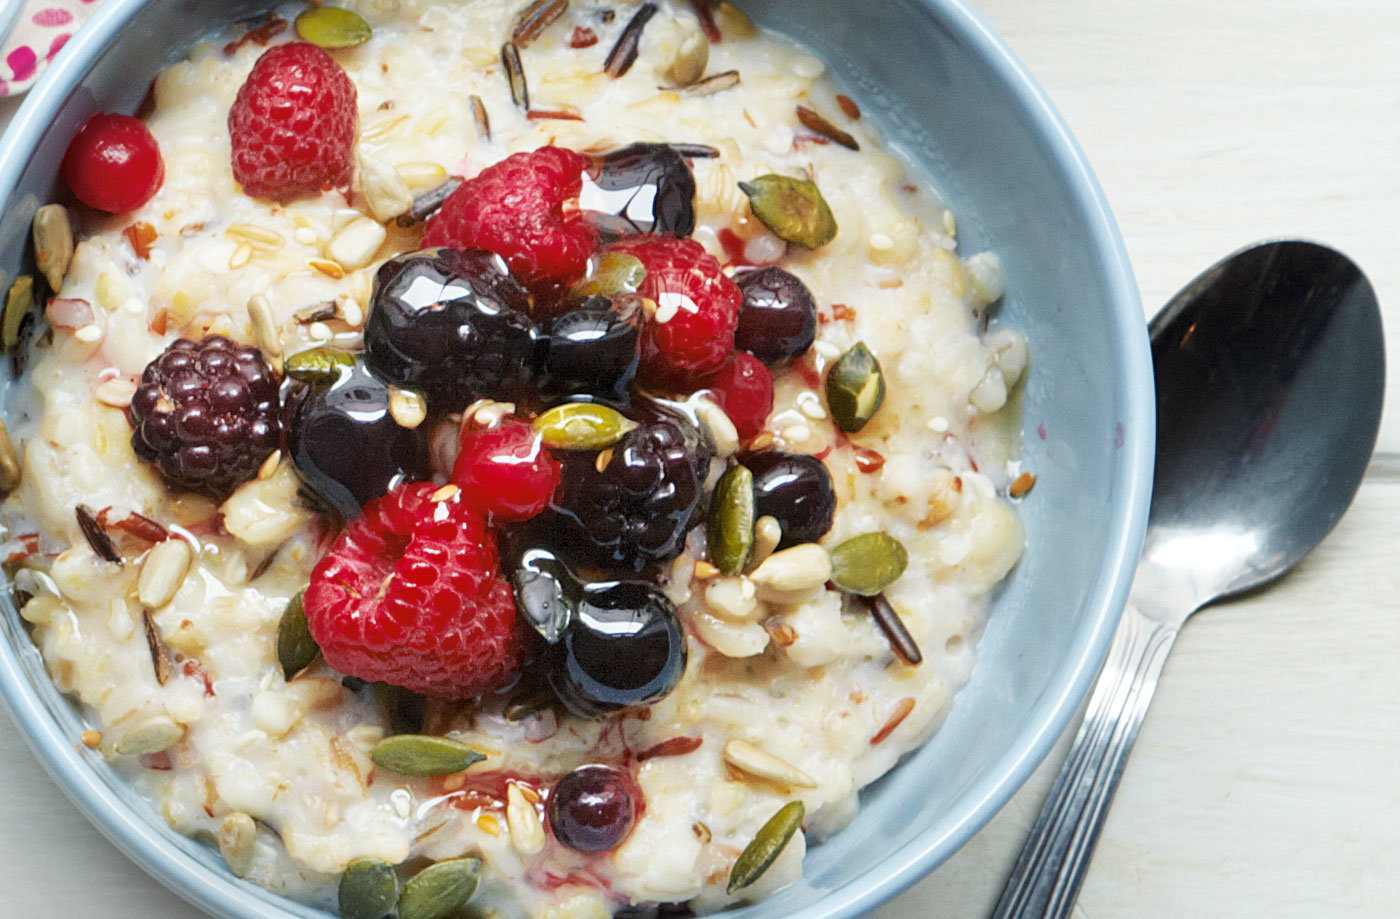 Seven-grain porridge with seeds and berries | Tesco Real Food